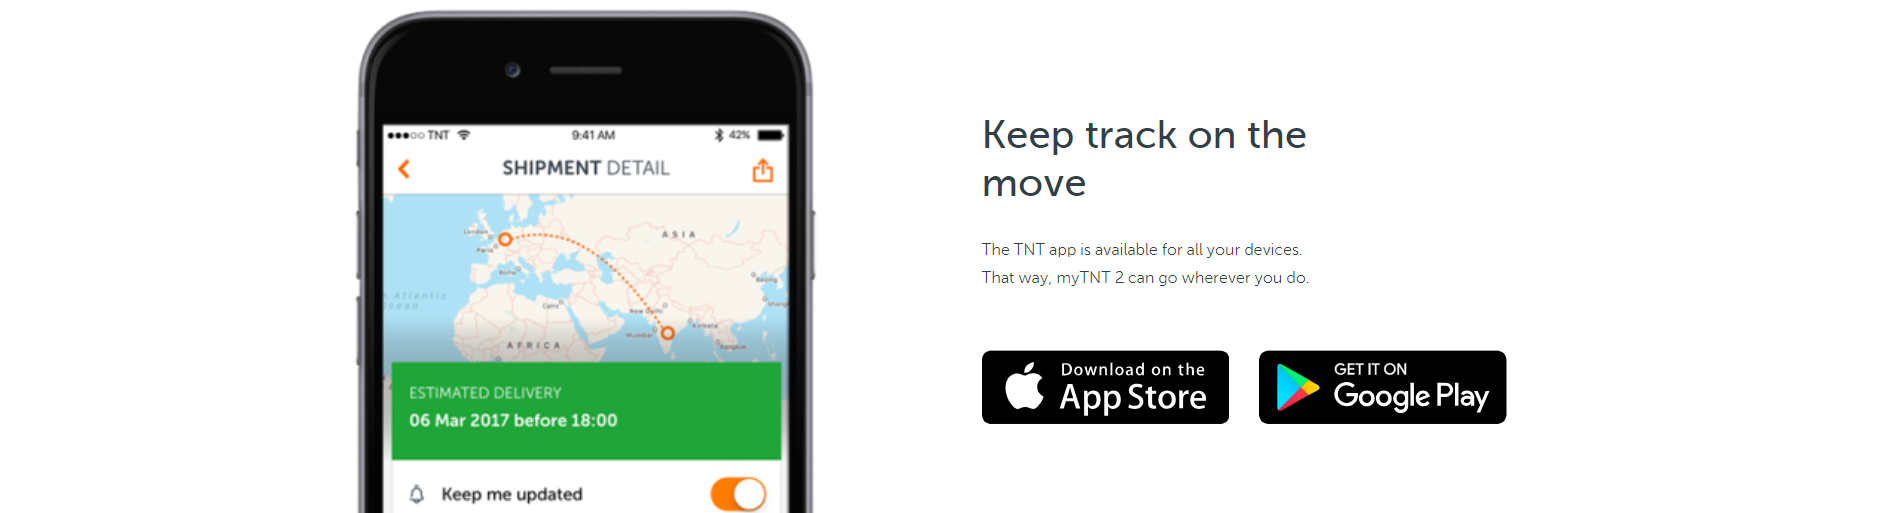 TNT mobile app